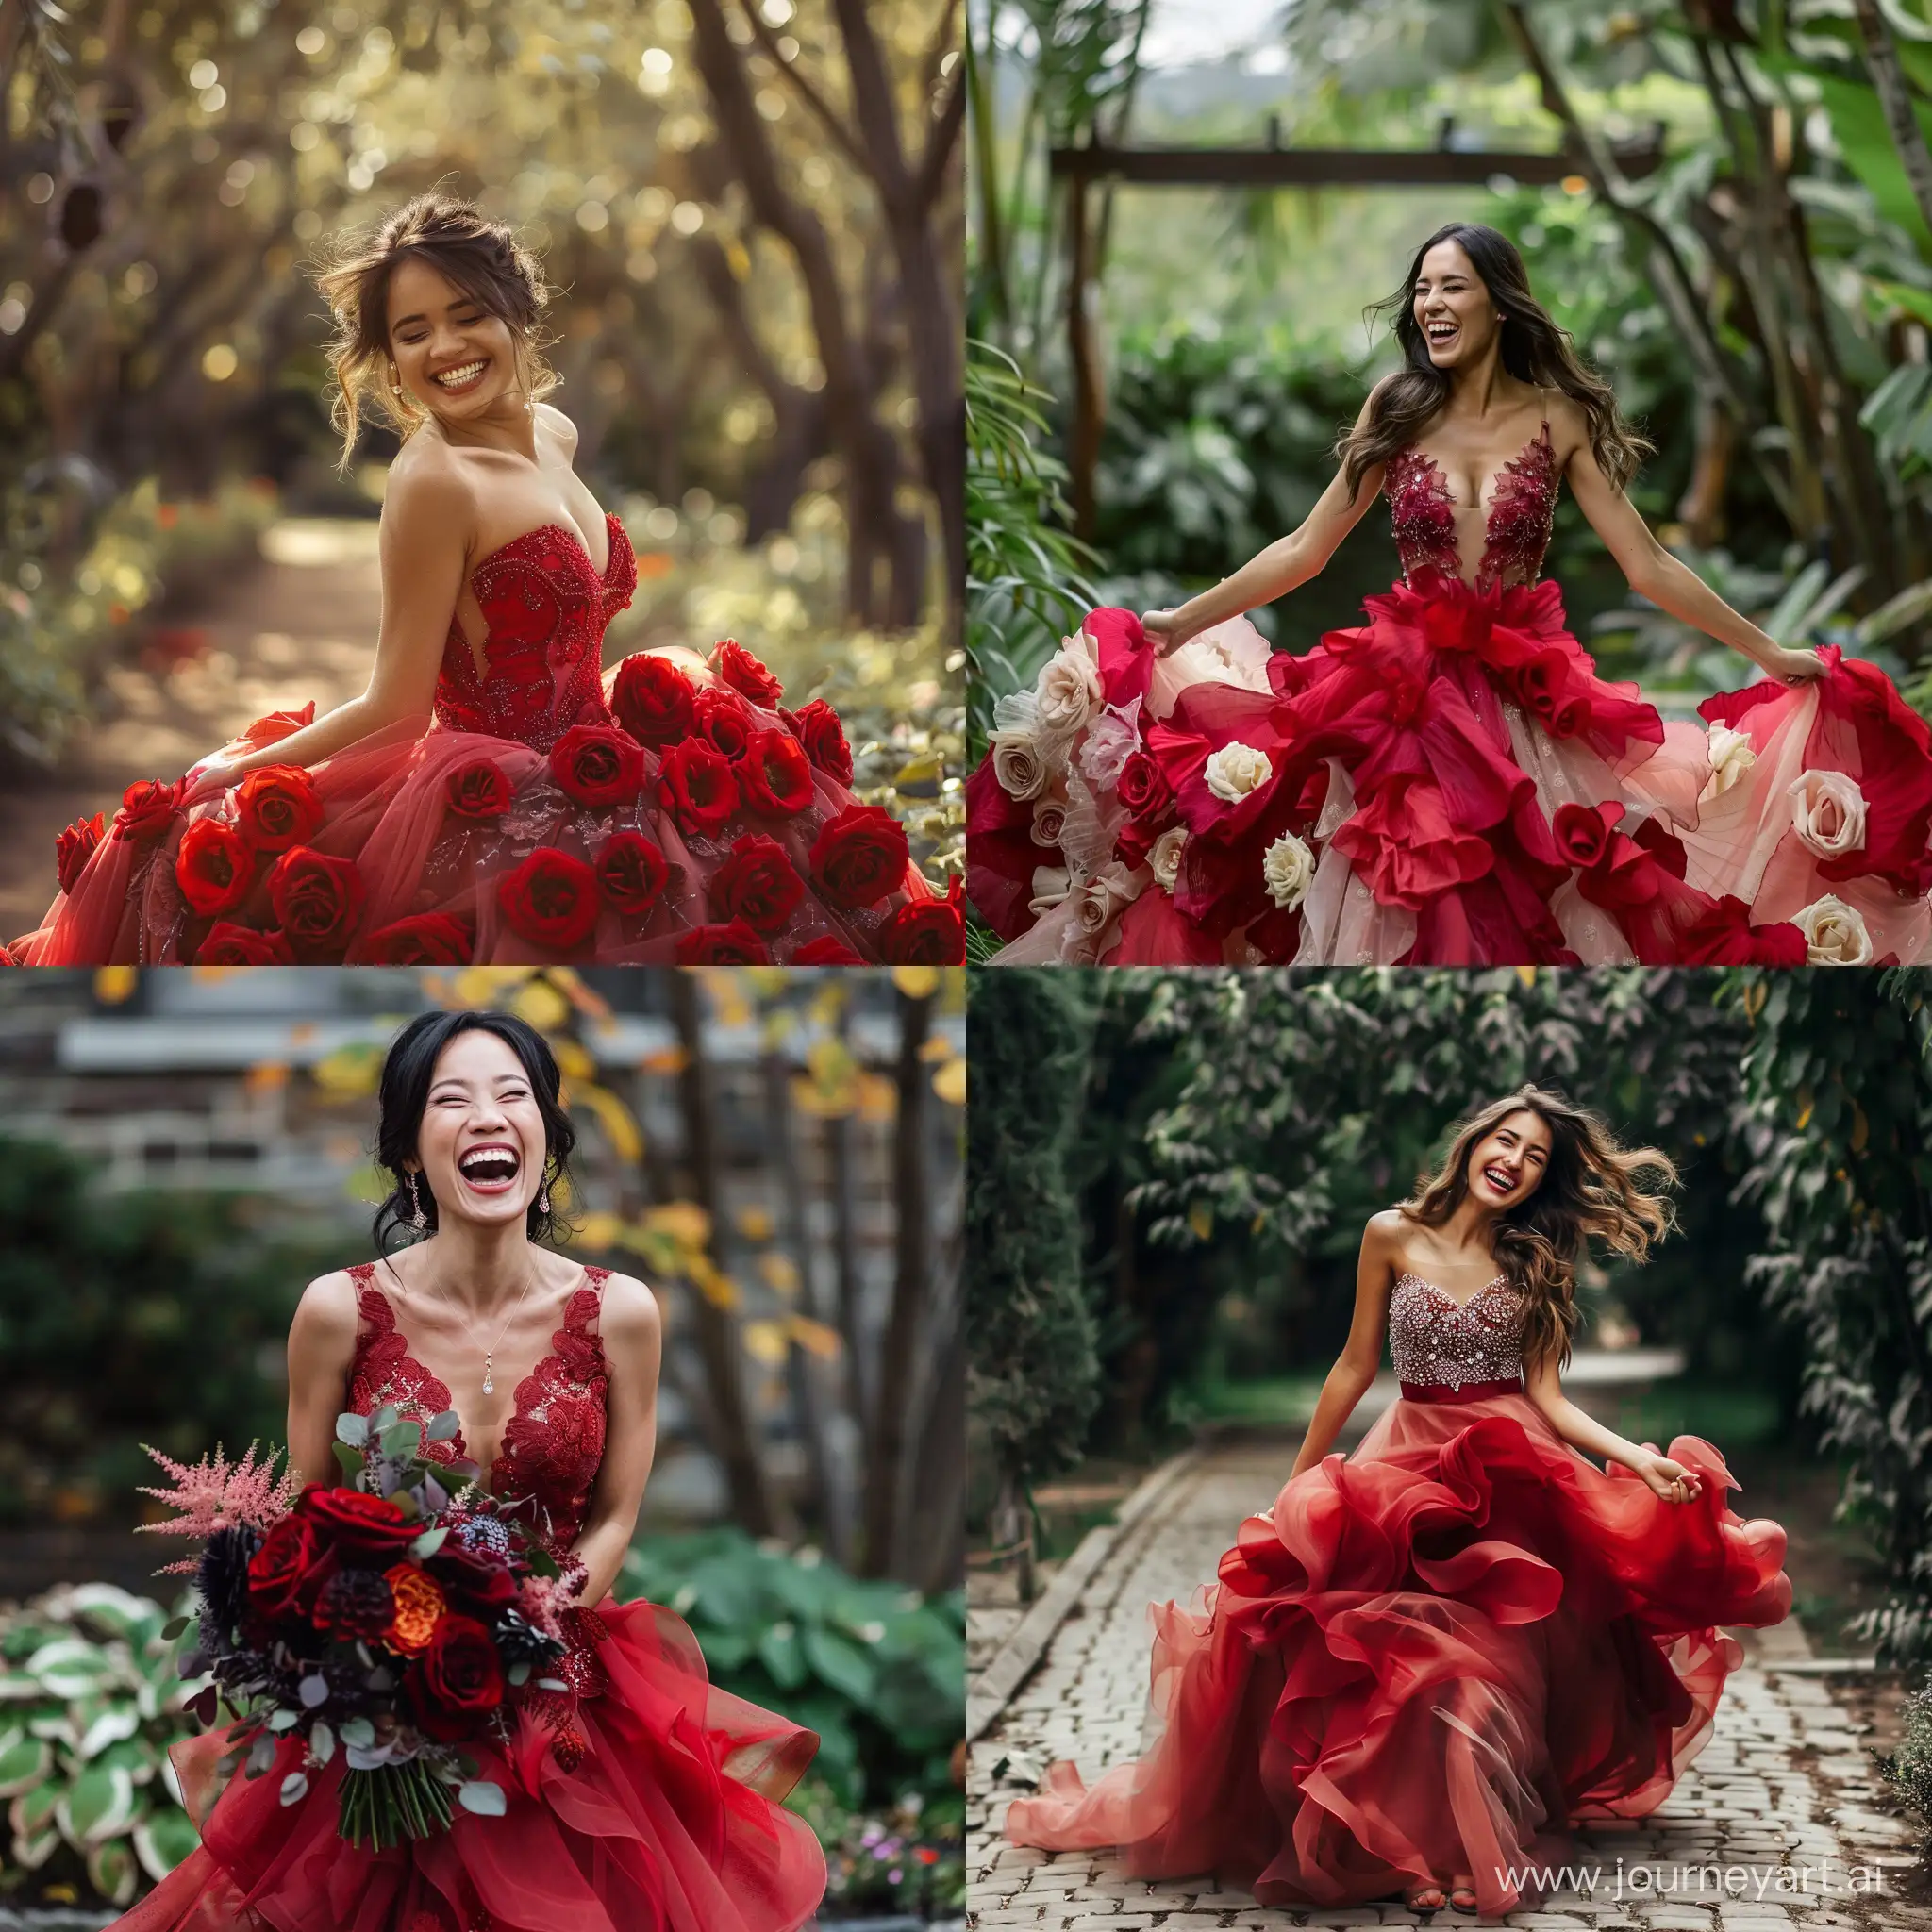 Joyful-Bride-in-Elegant-Rose-Red-Wedding-Dress